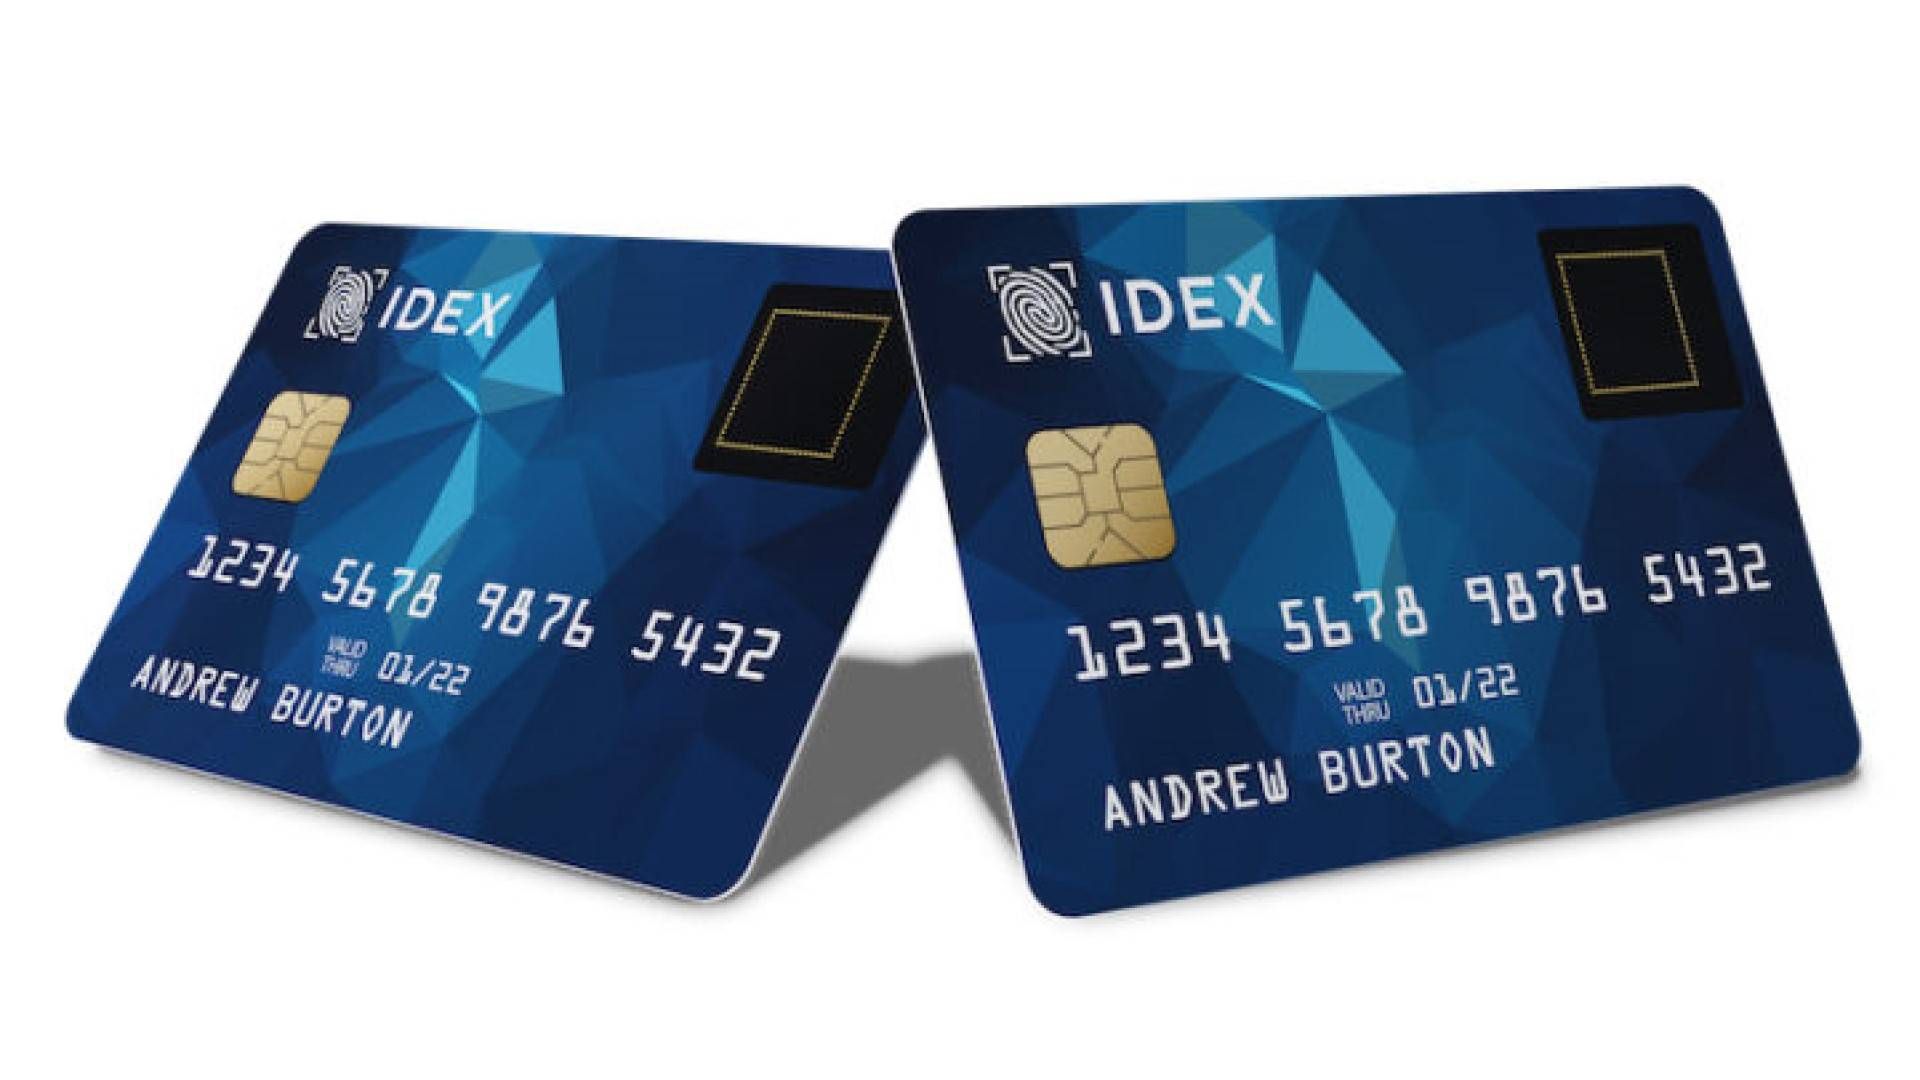 Norske Idex er klare for å tilby bankkort med digital autentisering som også støtter digital valuta. | Foto: Idex